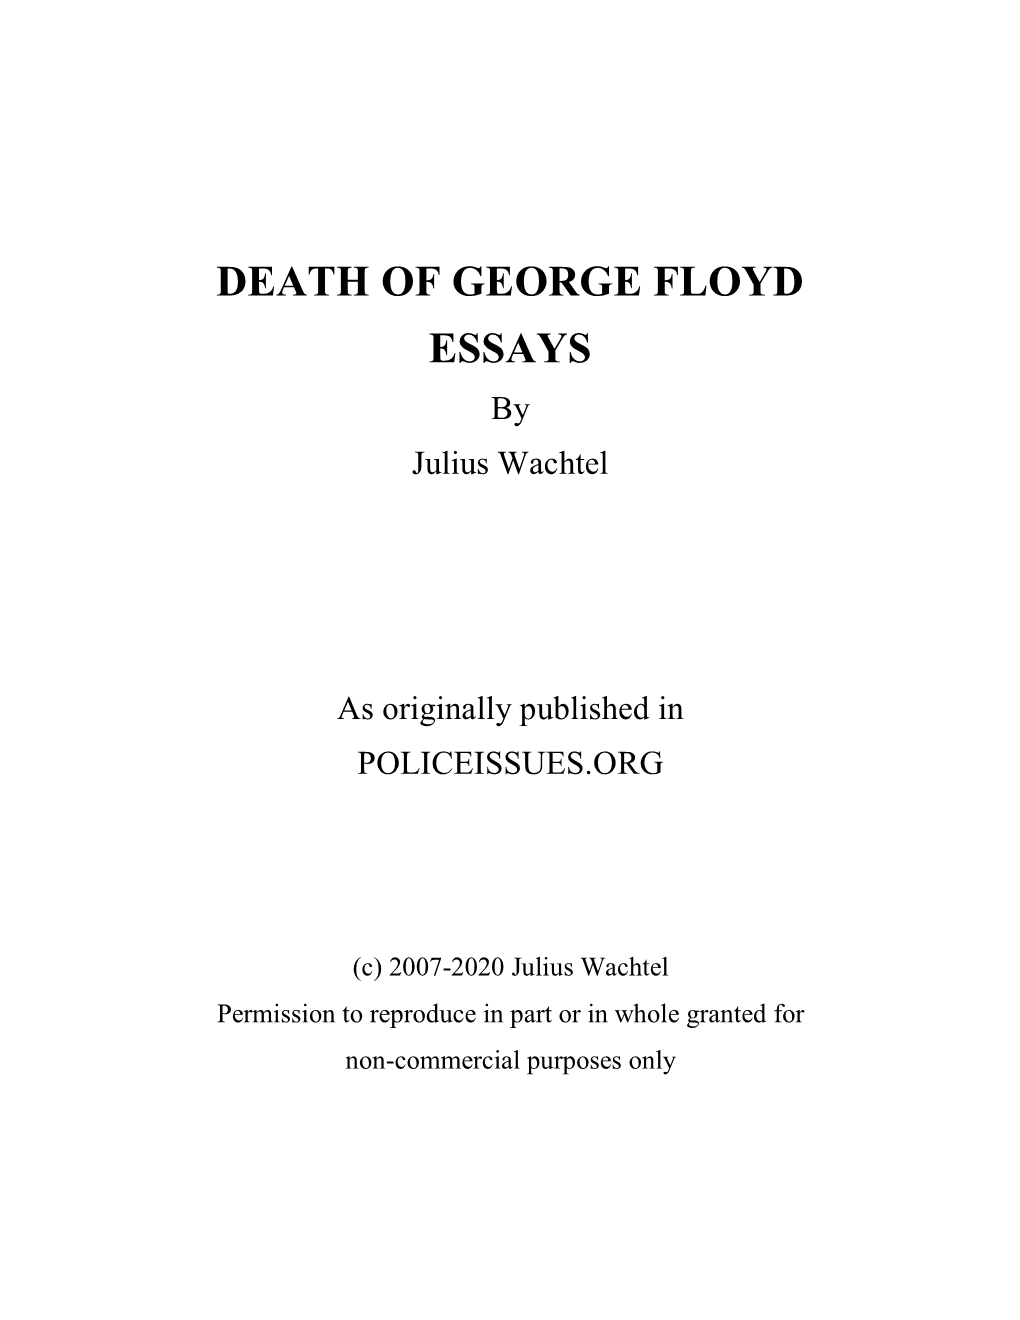 DEATH of GEORGE FLOYD ESSAYS by Julius Wachtel